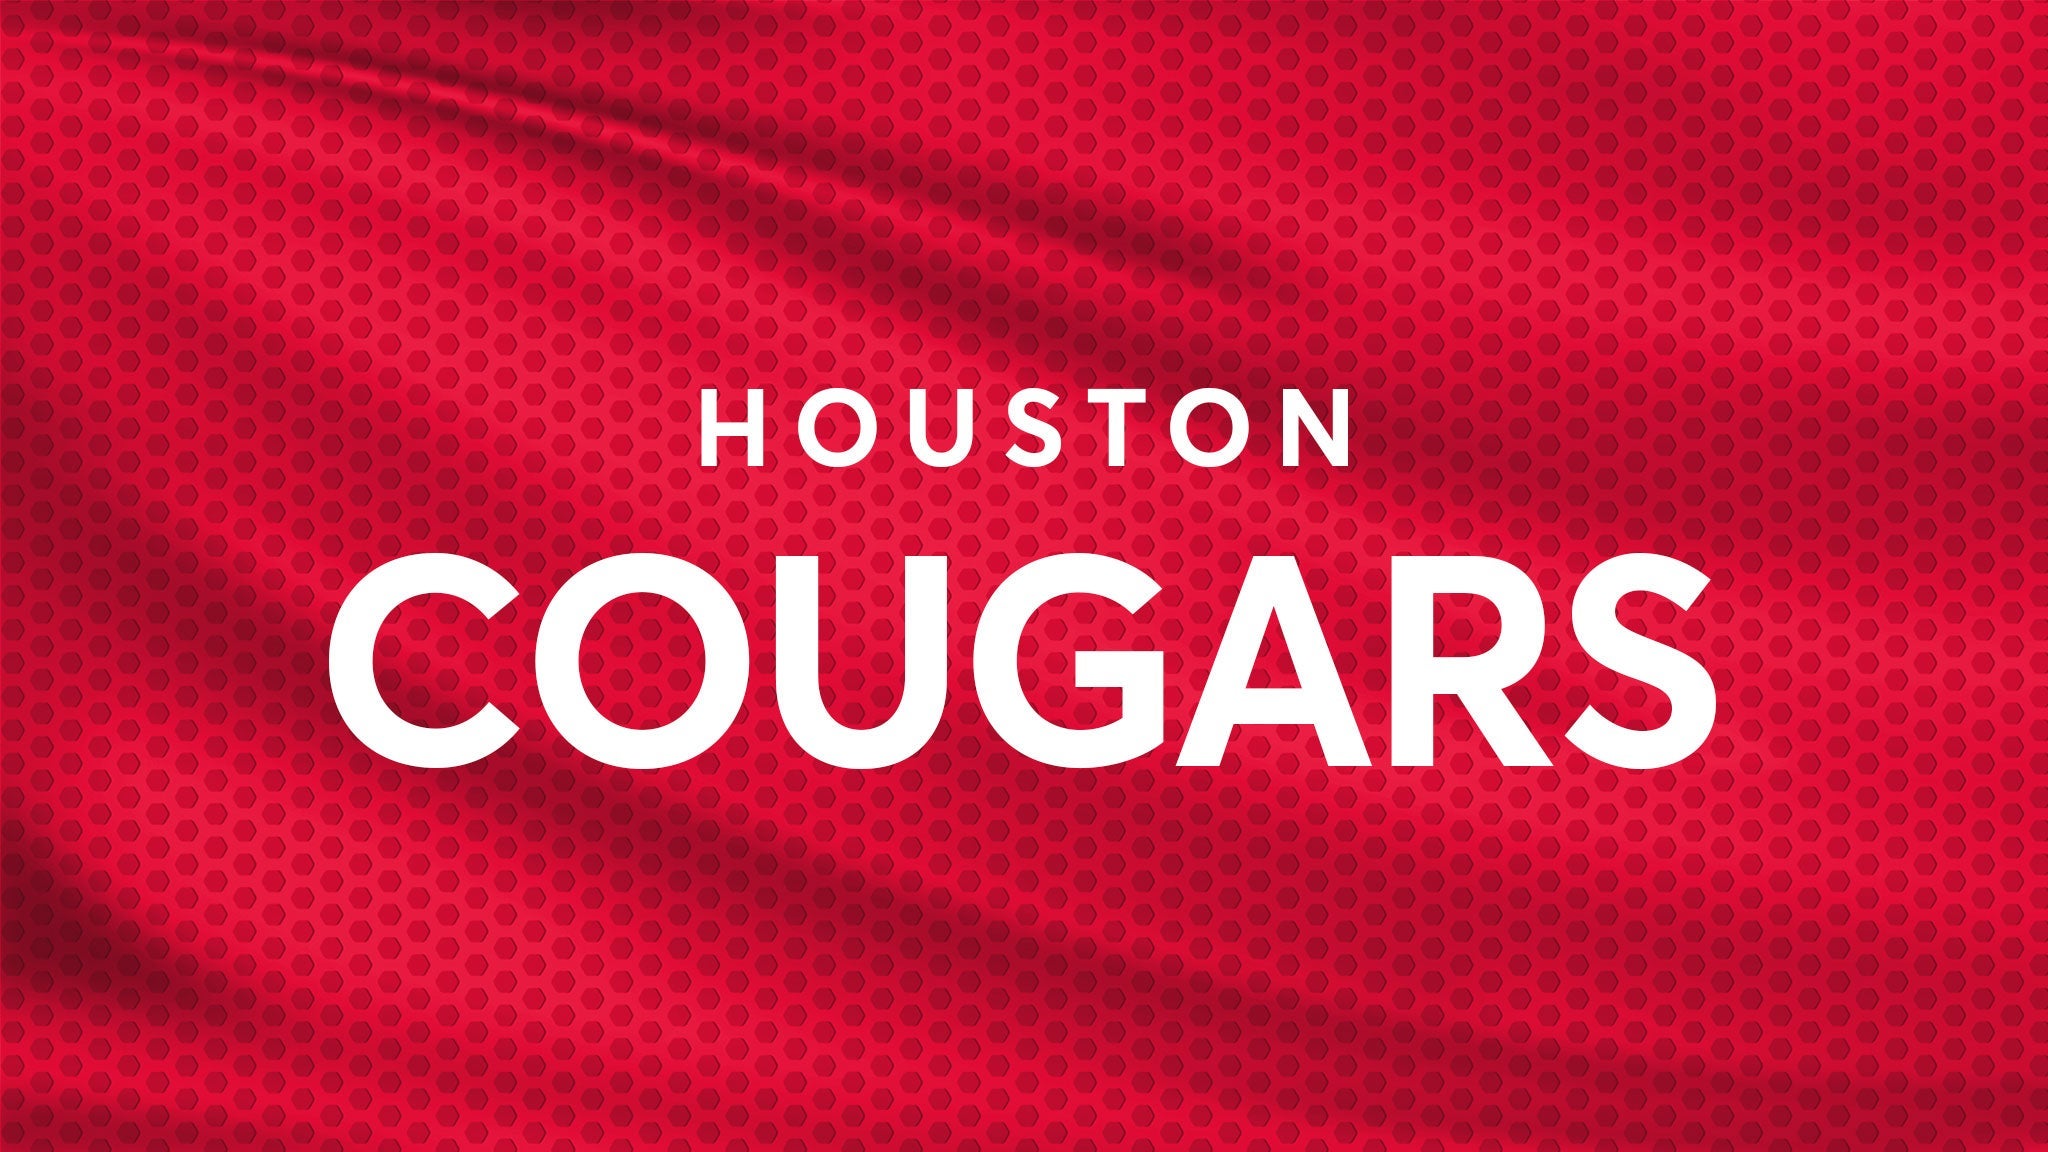 Houston Cougars Football vs. Kansas State Wildcats Football hero